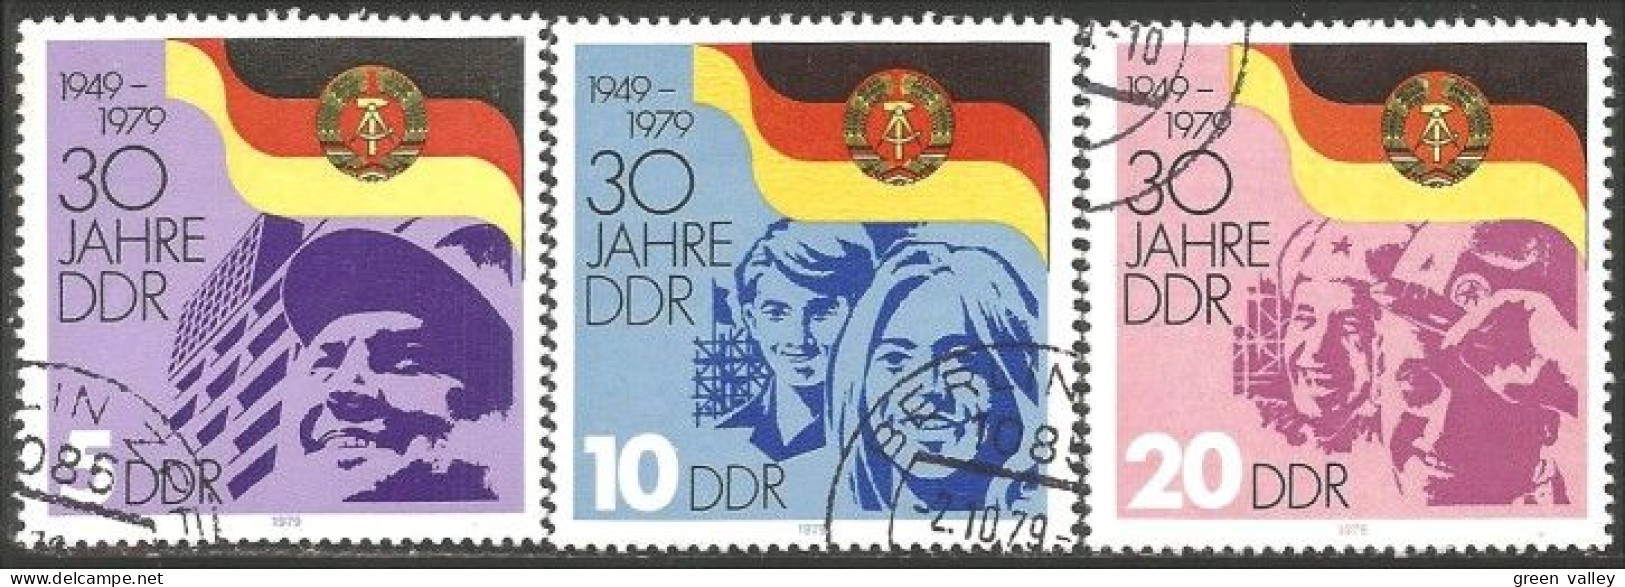 444 Germany DDR Drapeaux Flags (DDR-12) - Francobolli